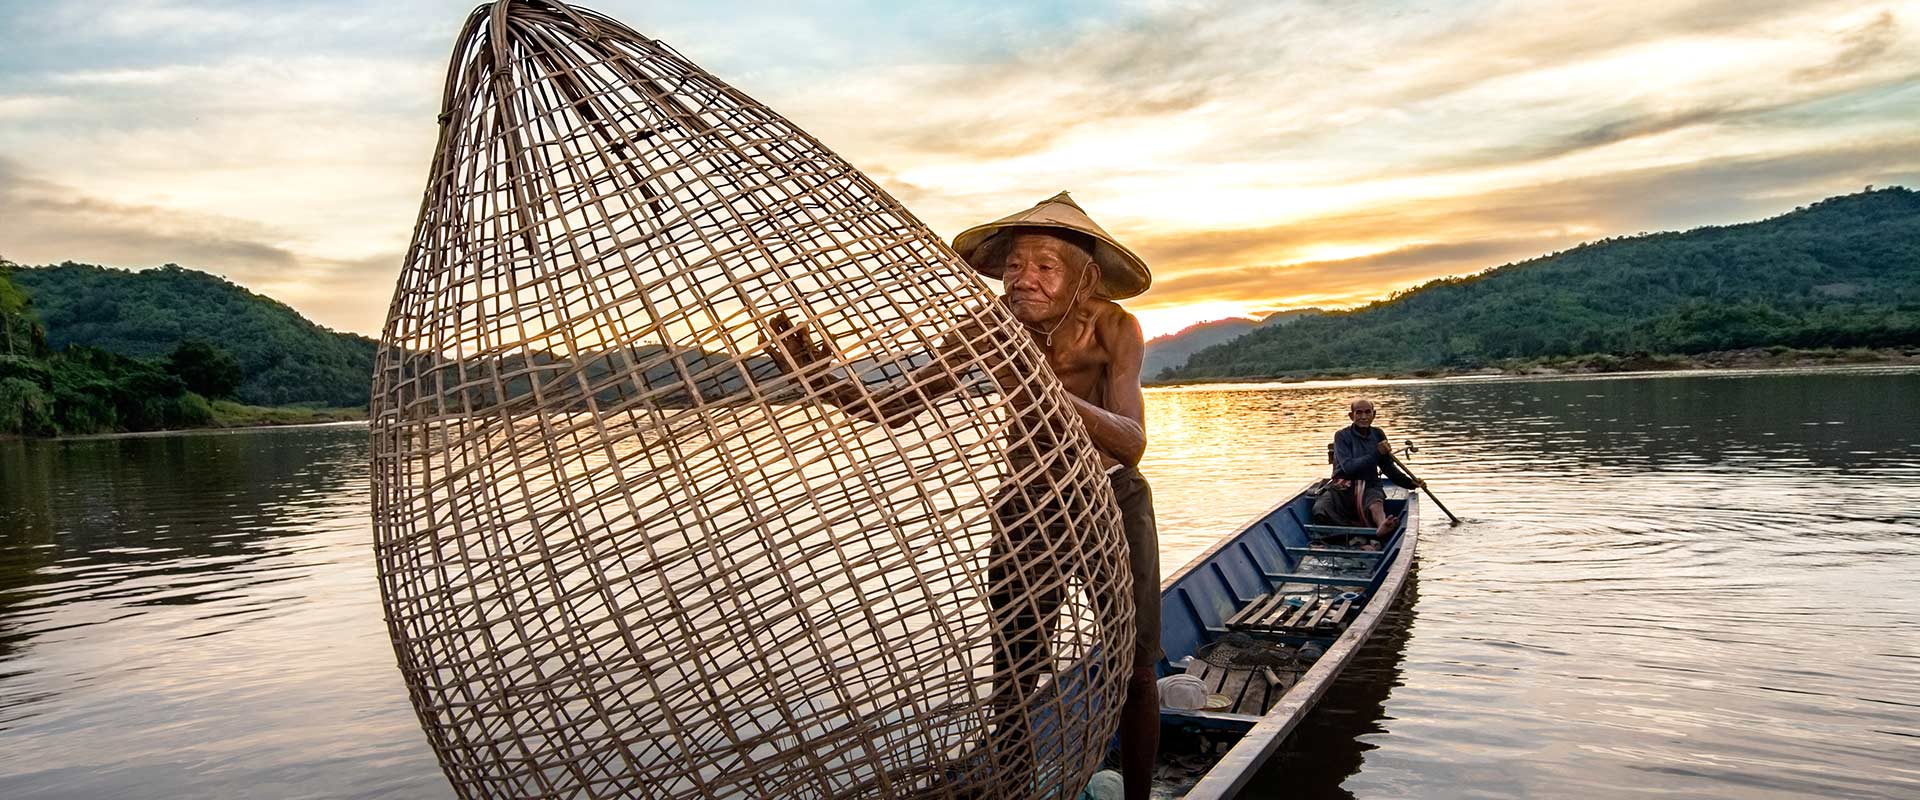 Elderly male fisherman on row boat holding a large fishing net, Cambodia